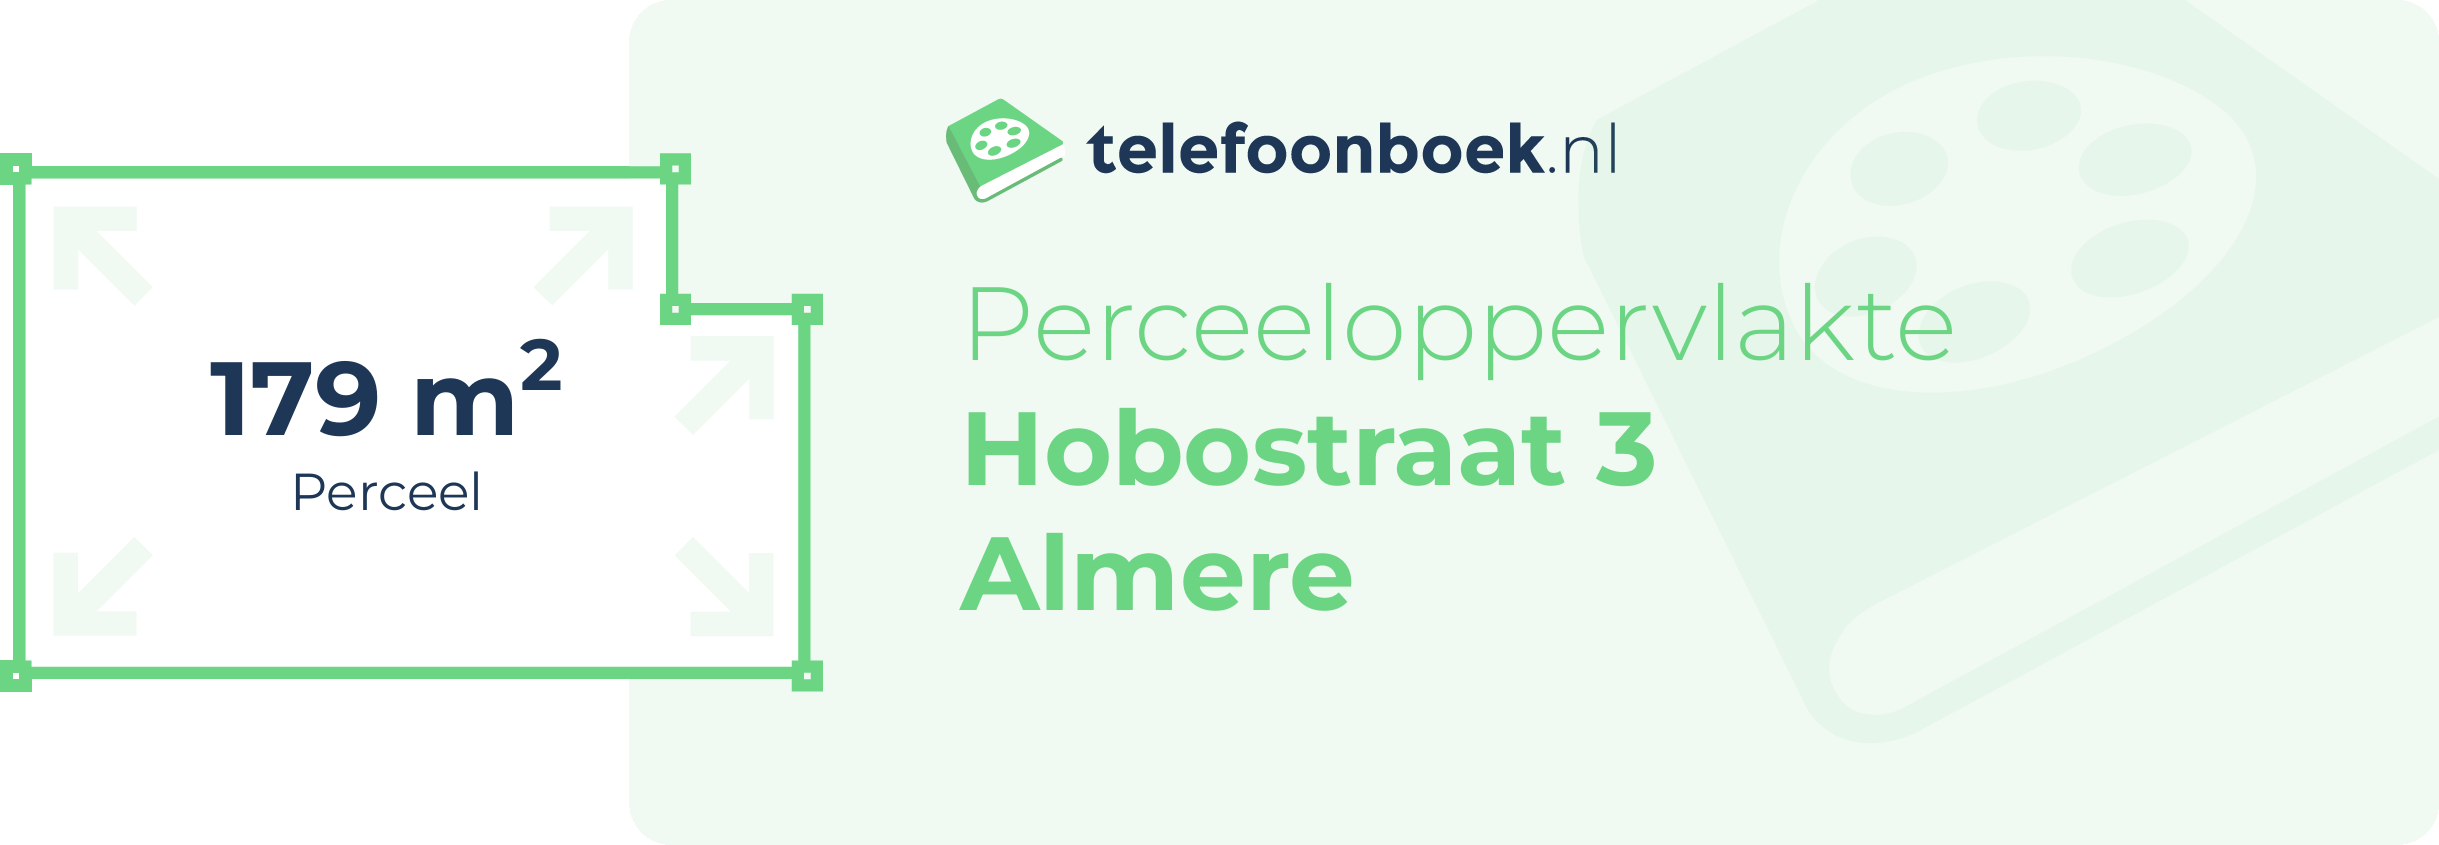 Perceeloppervlakte Hobostraat 3 Almere